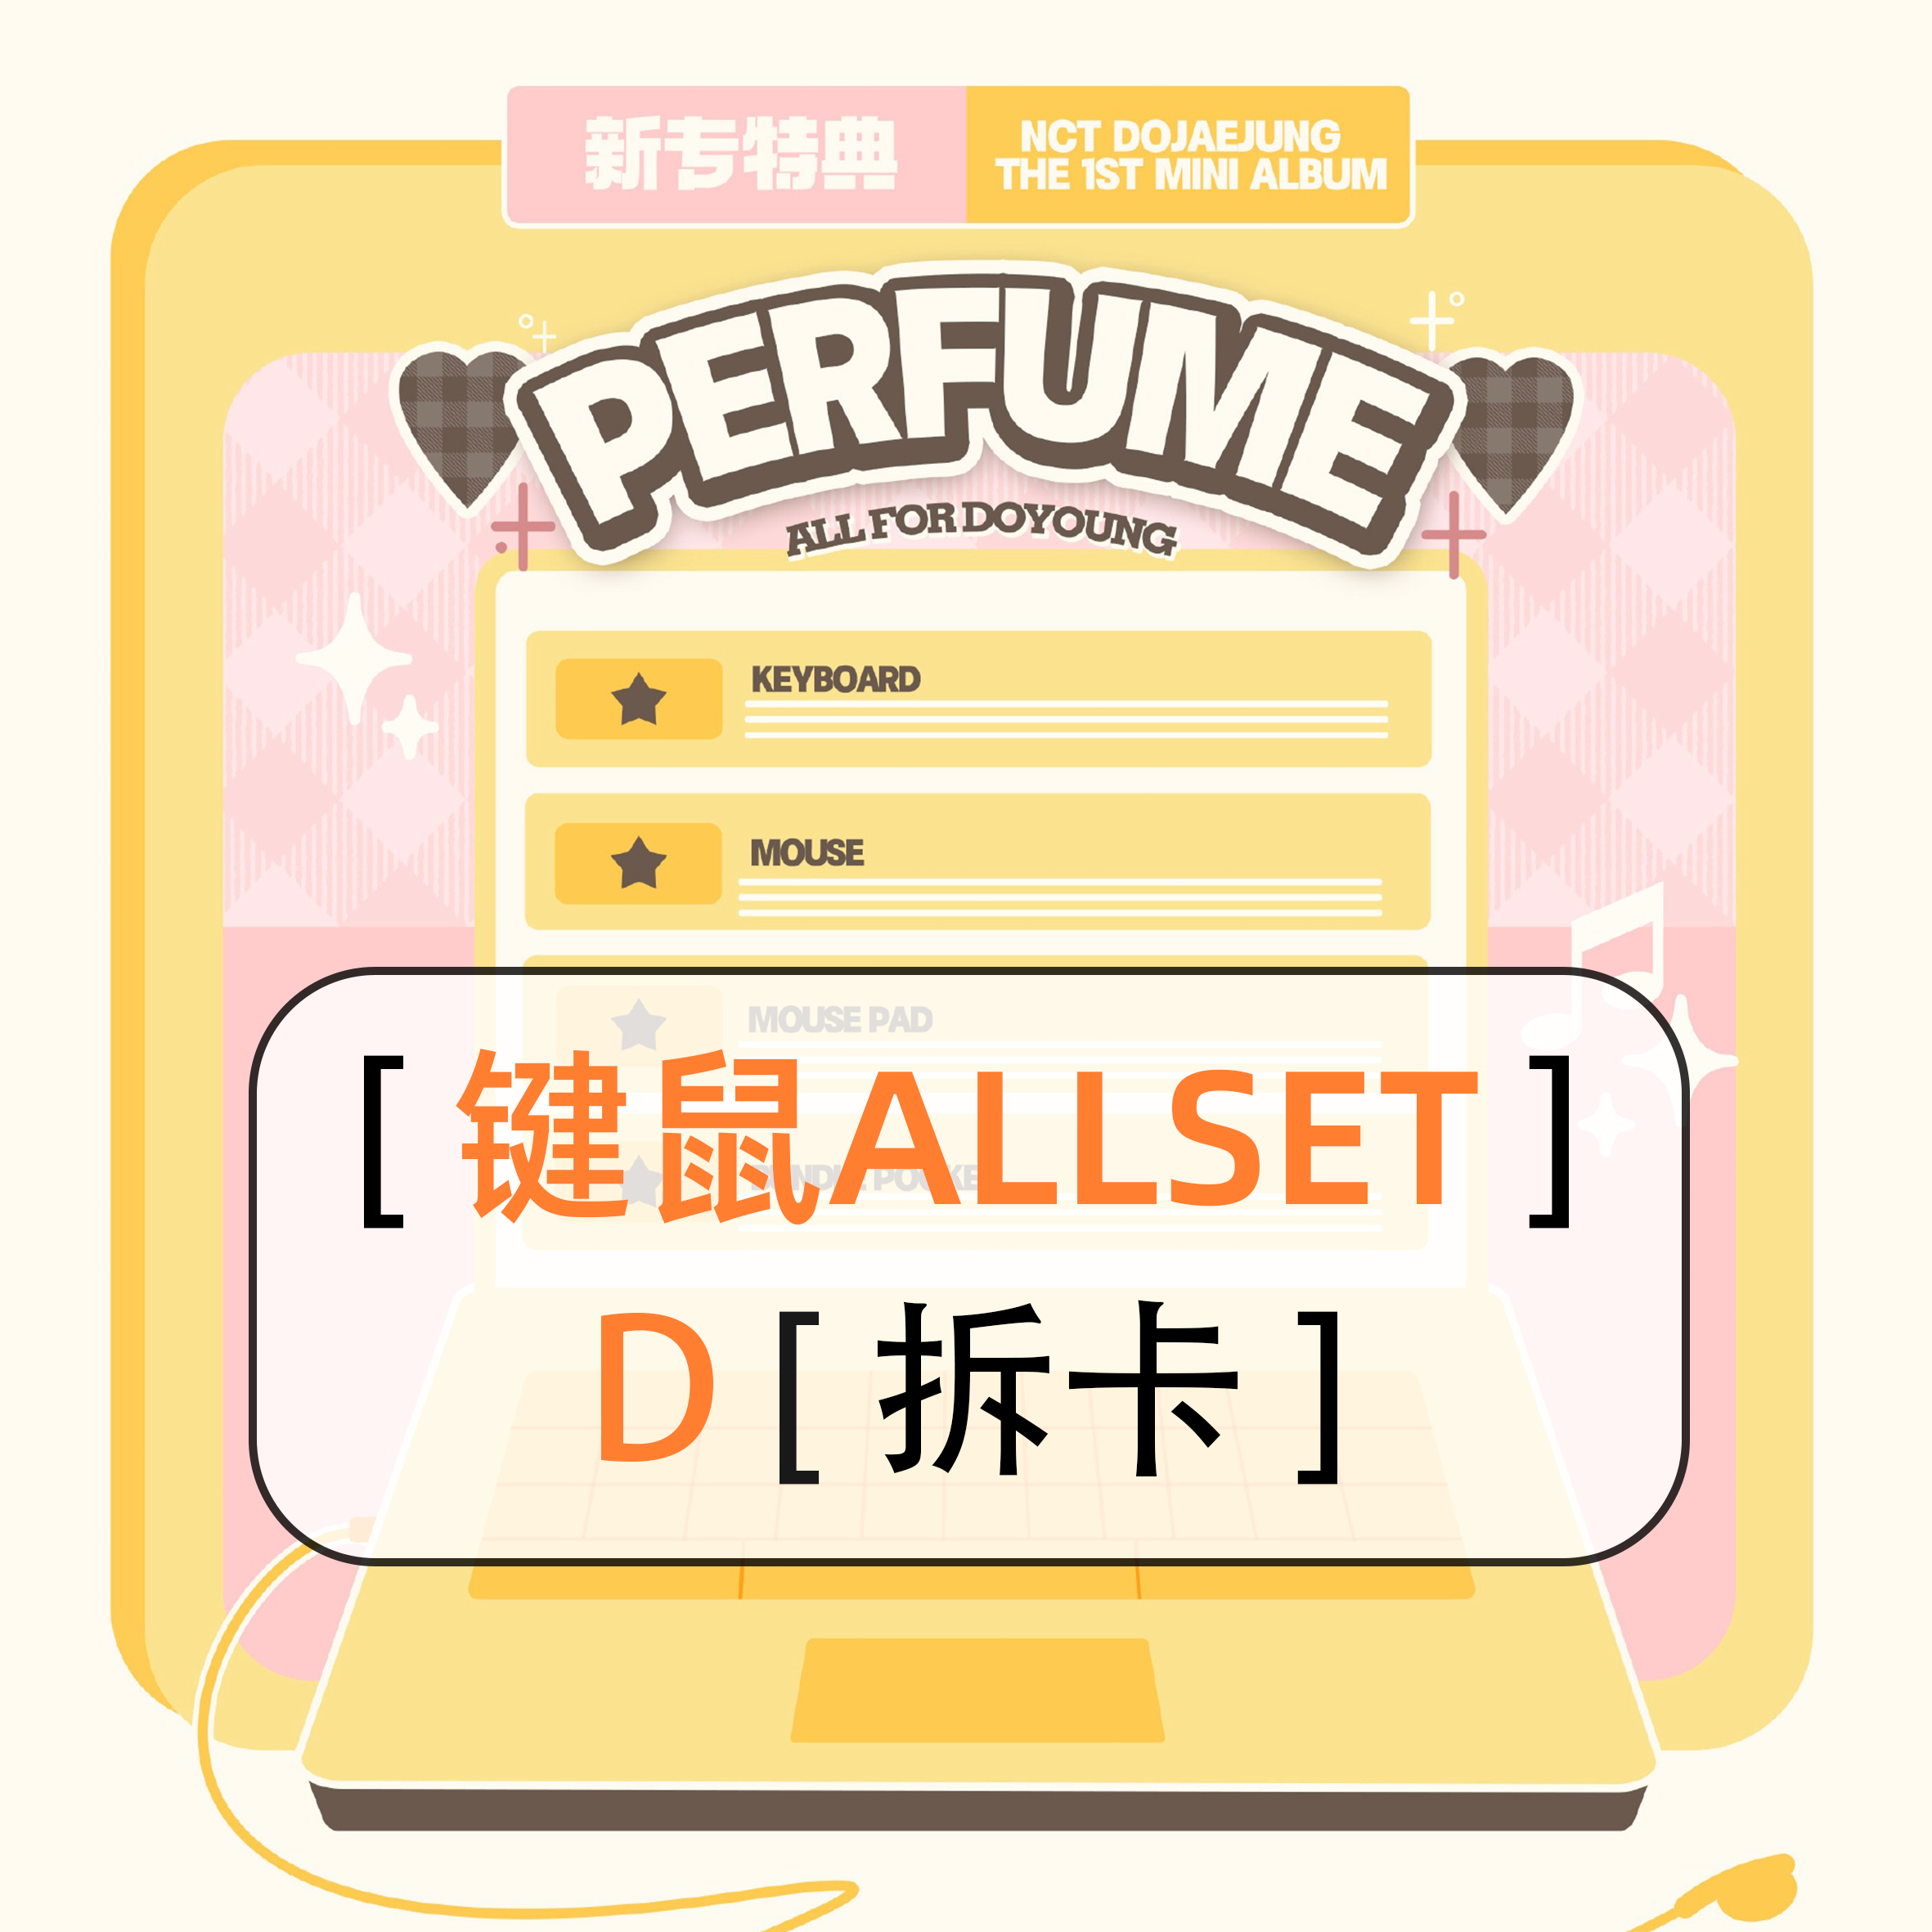 [拆卡专 键盘all set D版] NCT DOJAEJUNG - The 1st Mini Album [Perfume] (Digipack Ver.)_道英吧_DoYoungBar